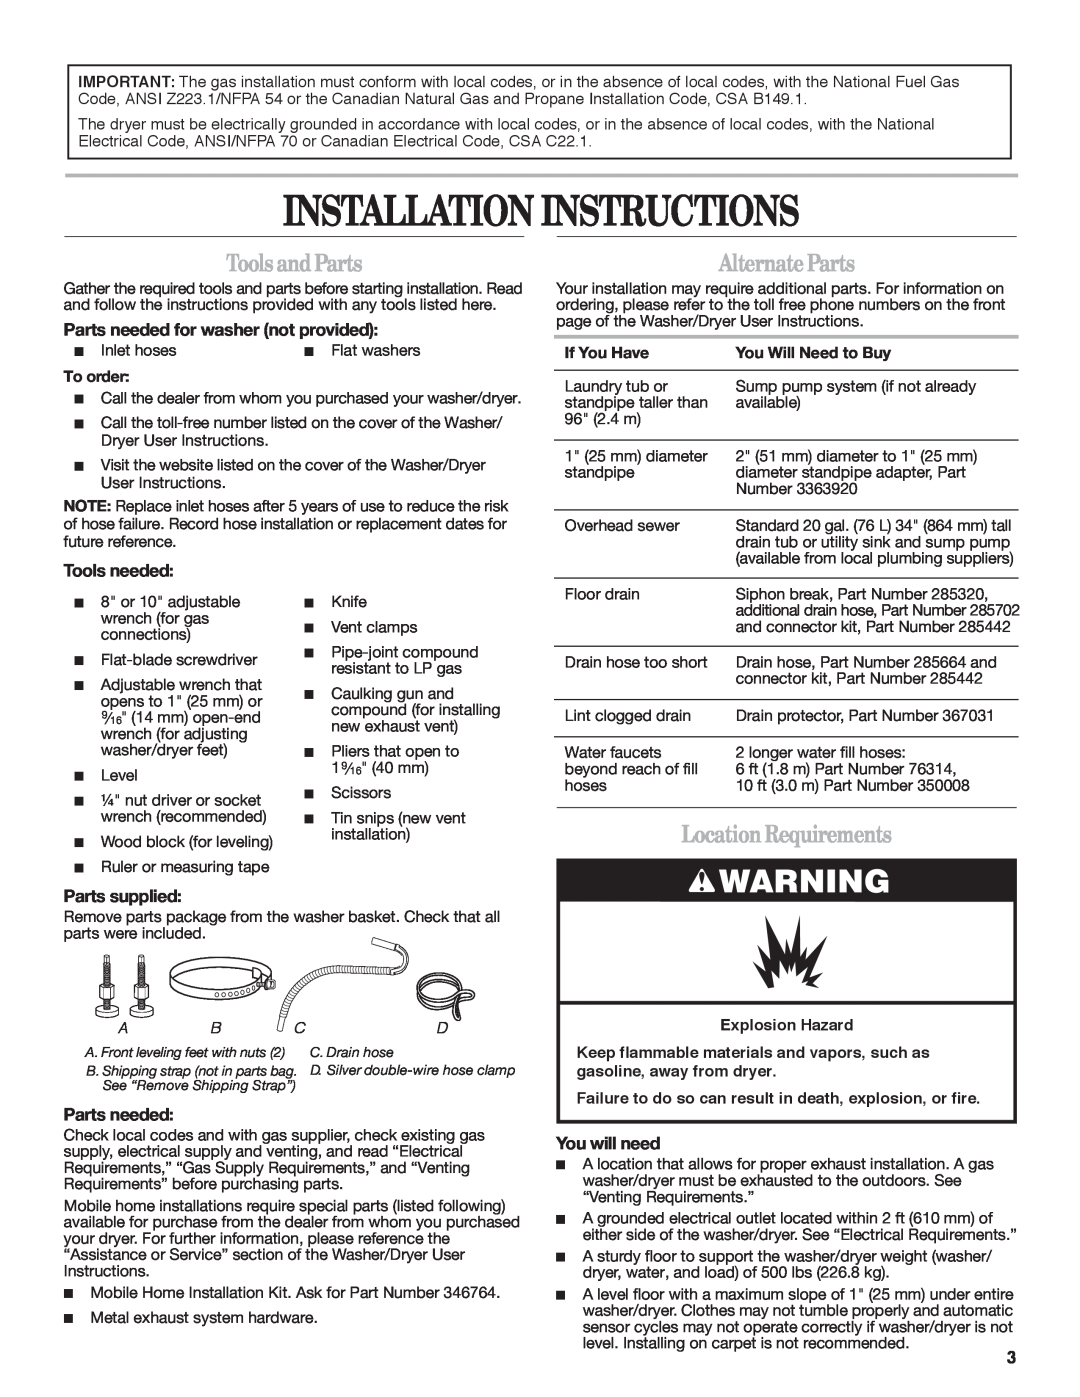 Whirlpool Gas Washer/Dryer ToolsandParts, AlternateParts, LocationRequirements, Installationinstructions, Tools needed 